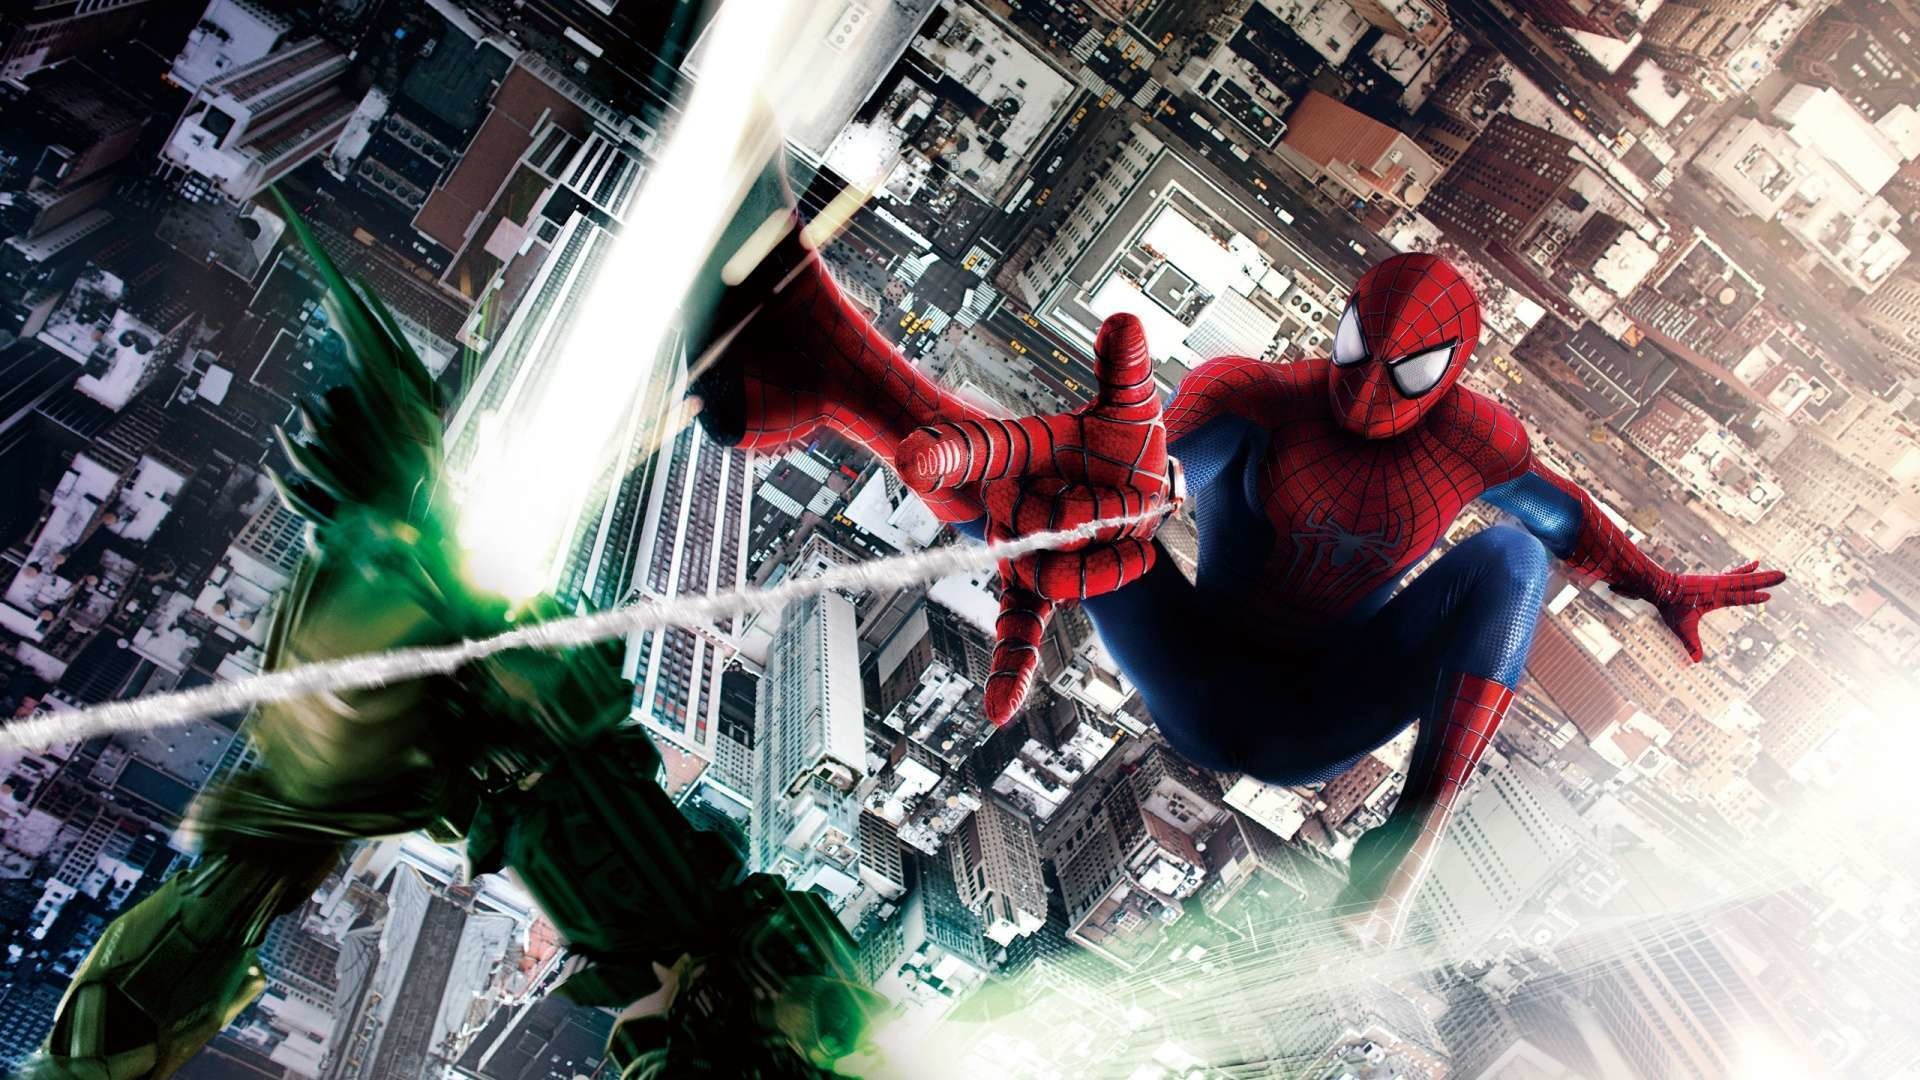 Wallpaper: Hd Wallpaper The Amazing Spider Man 2 Imax 1080p. Upload at .